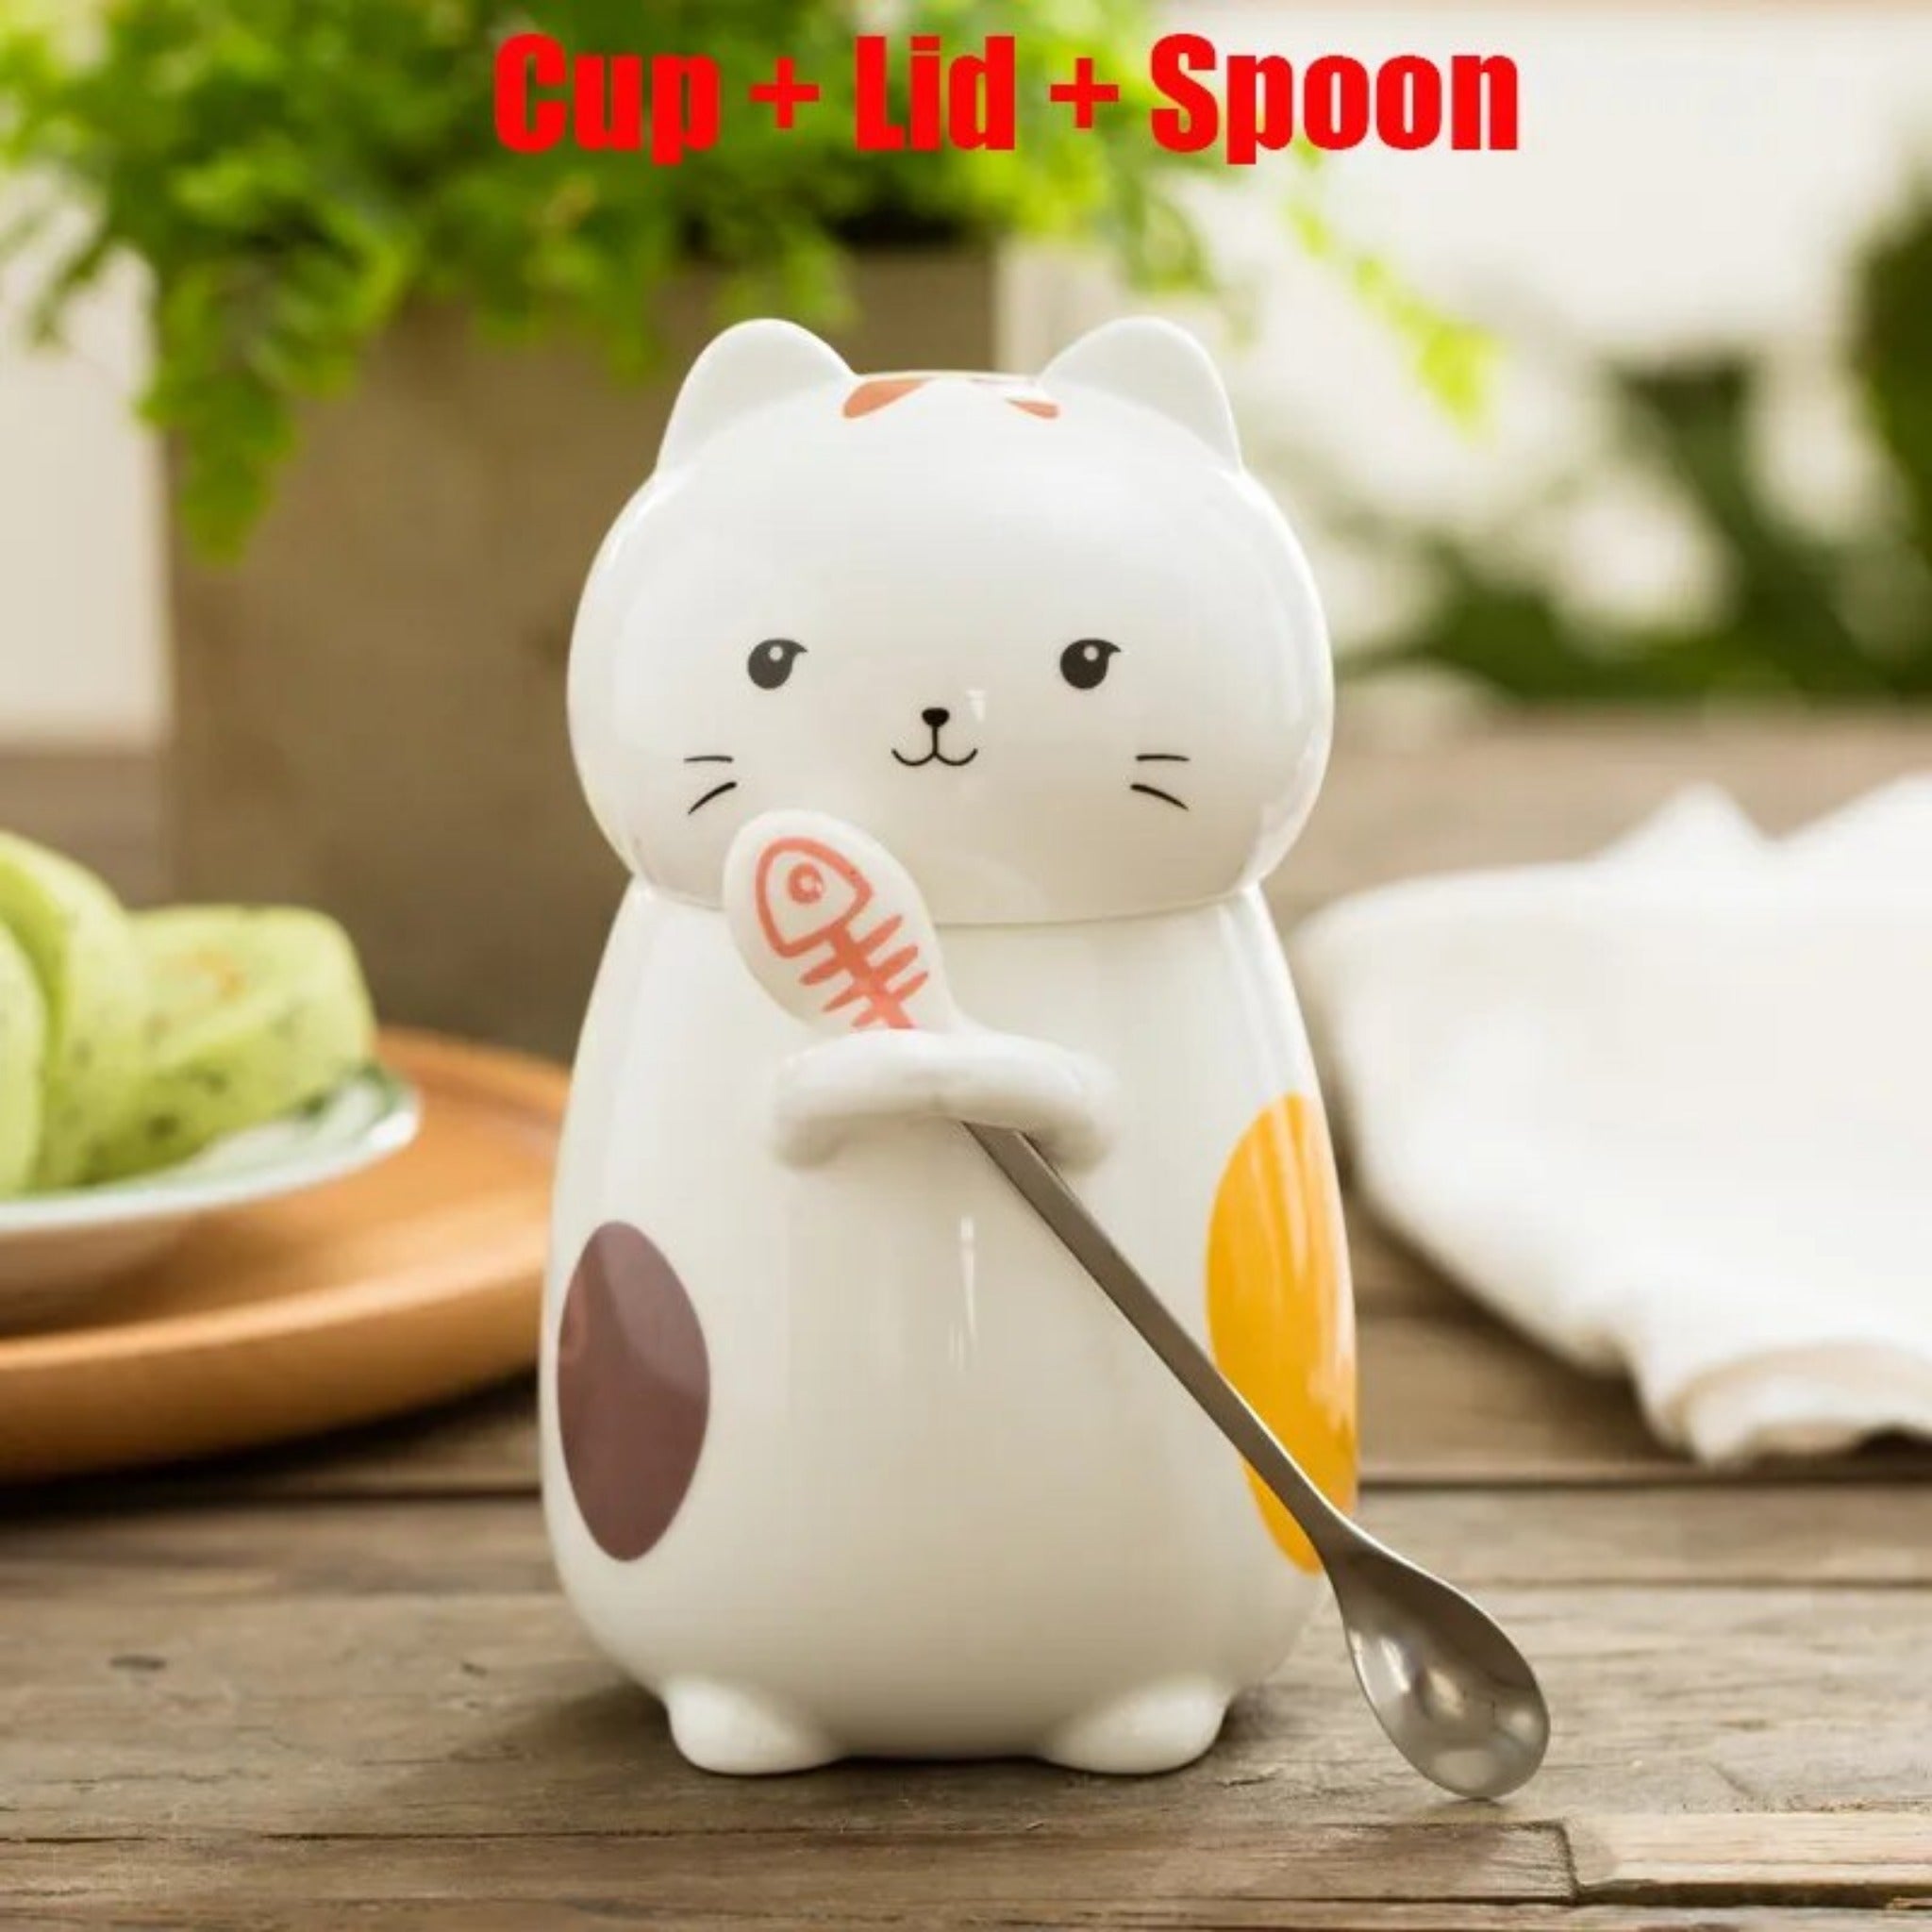 Tootsie Cat Ceramic Mug With Lid And Spoon